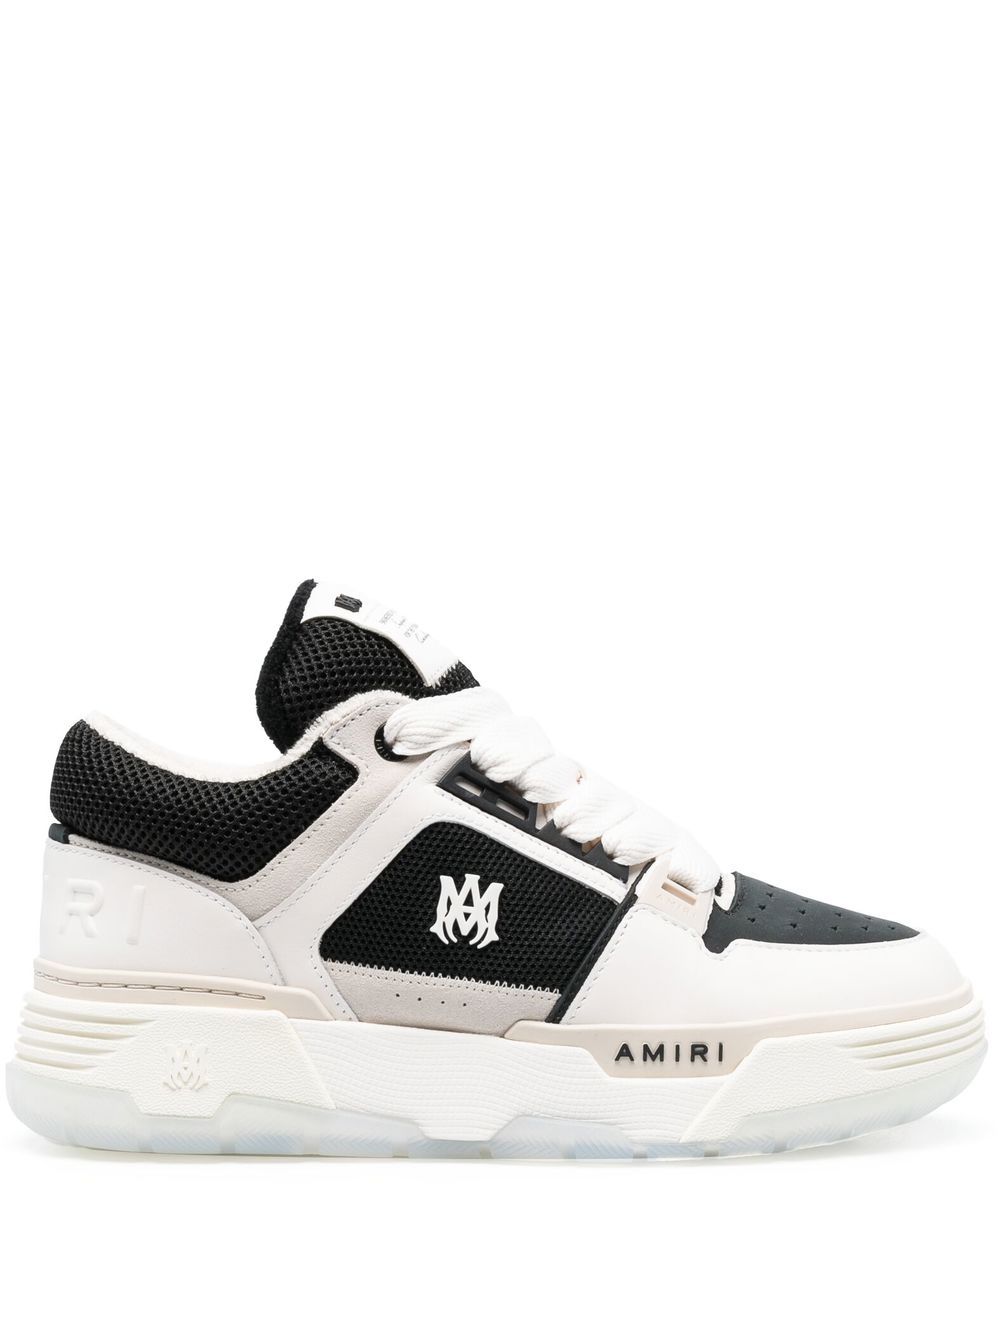 Amiri Two-tone Ma-1 Sneakers In Black And White | ModeSens